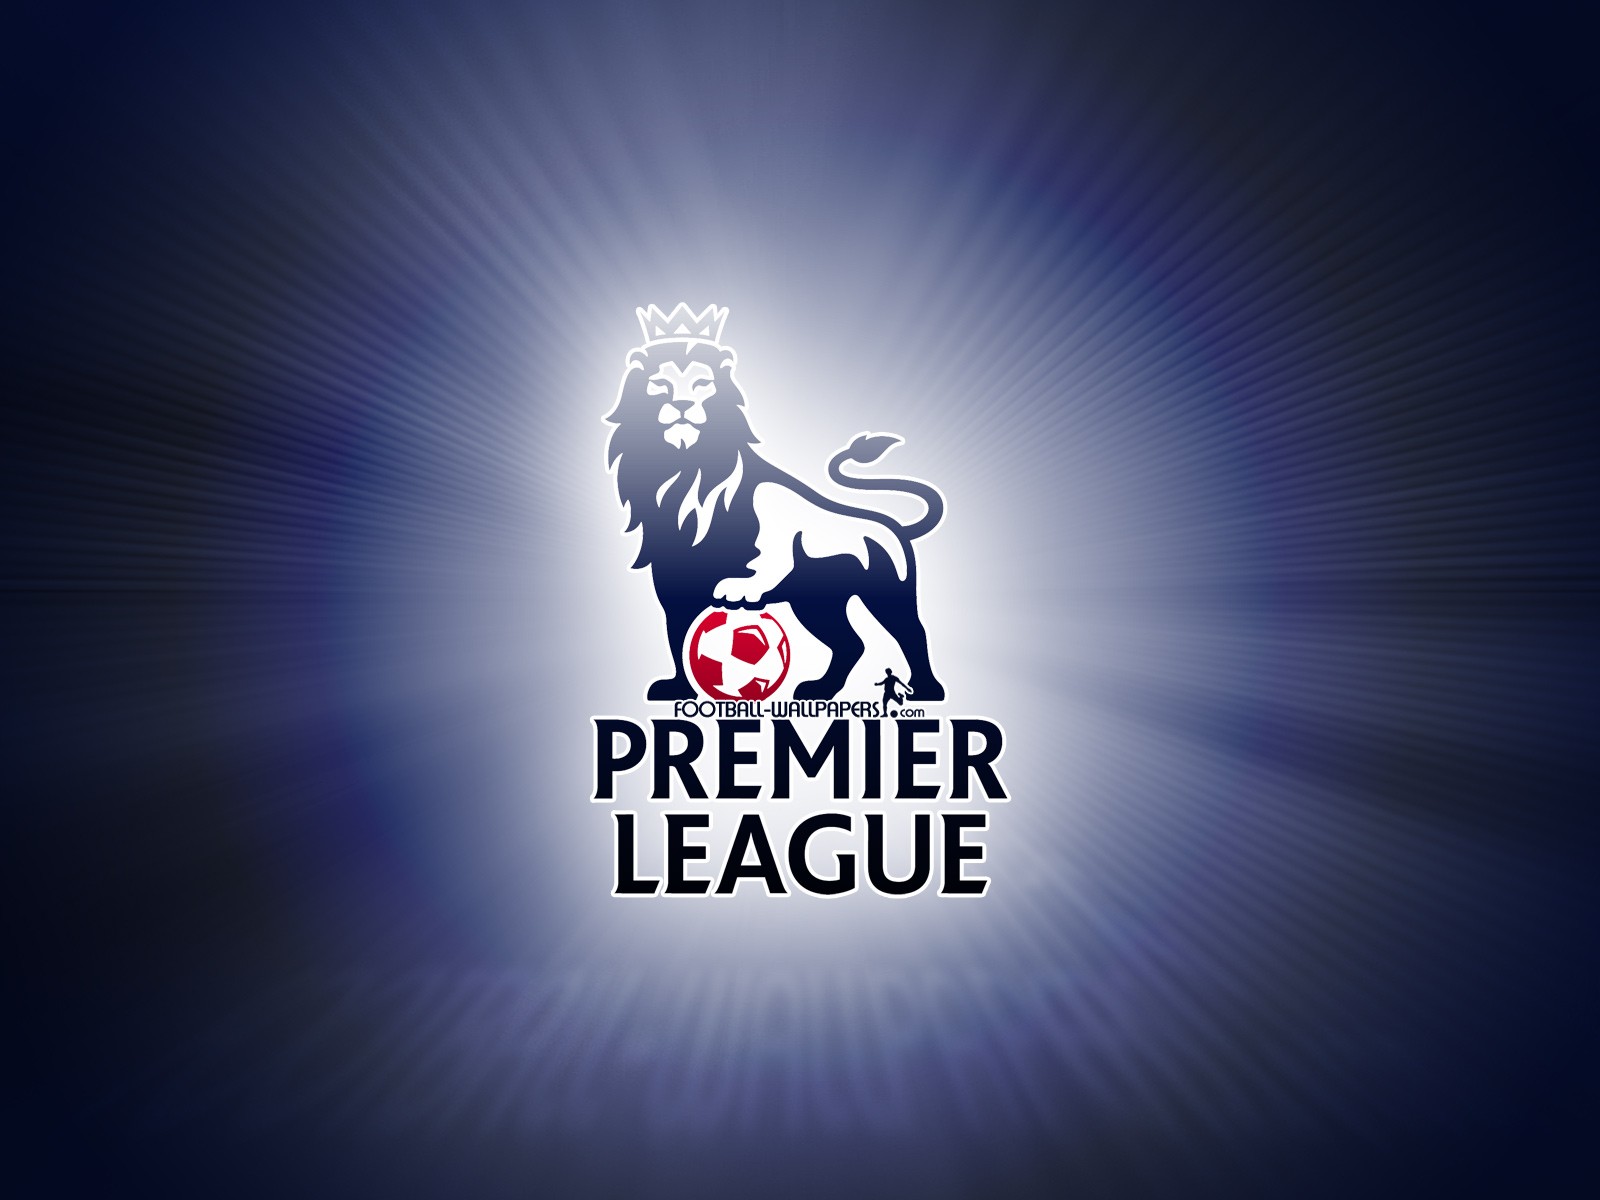 English Premier League breaks its own transfer record 234sport